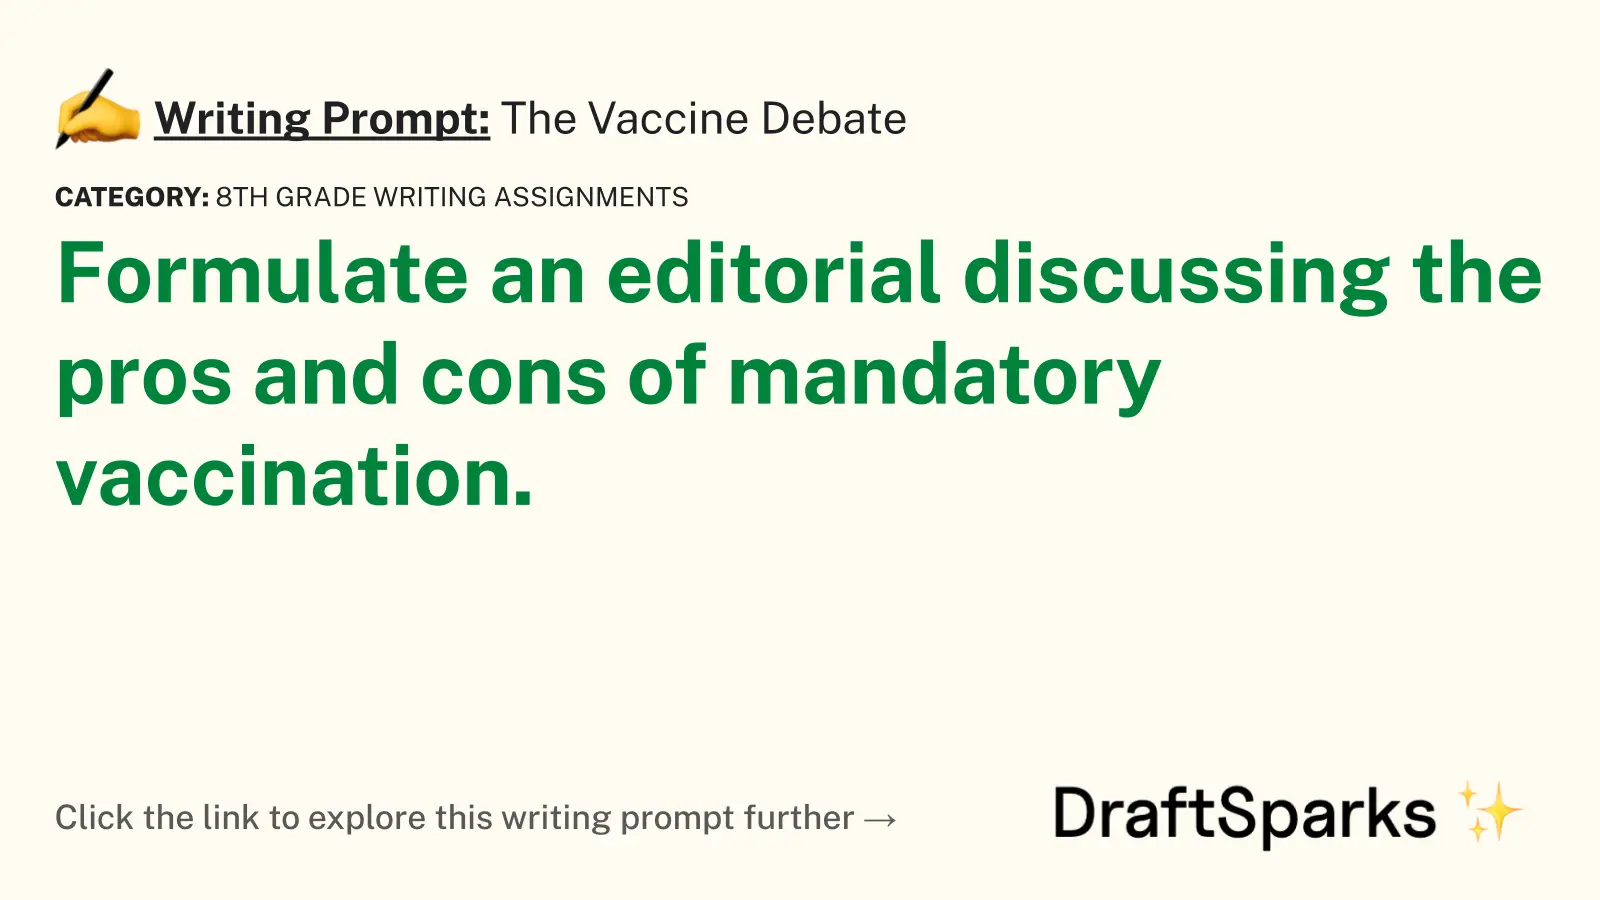 The Vaccine Debate